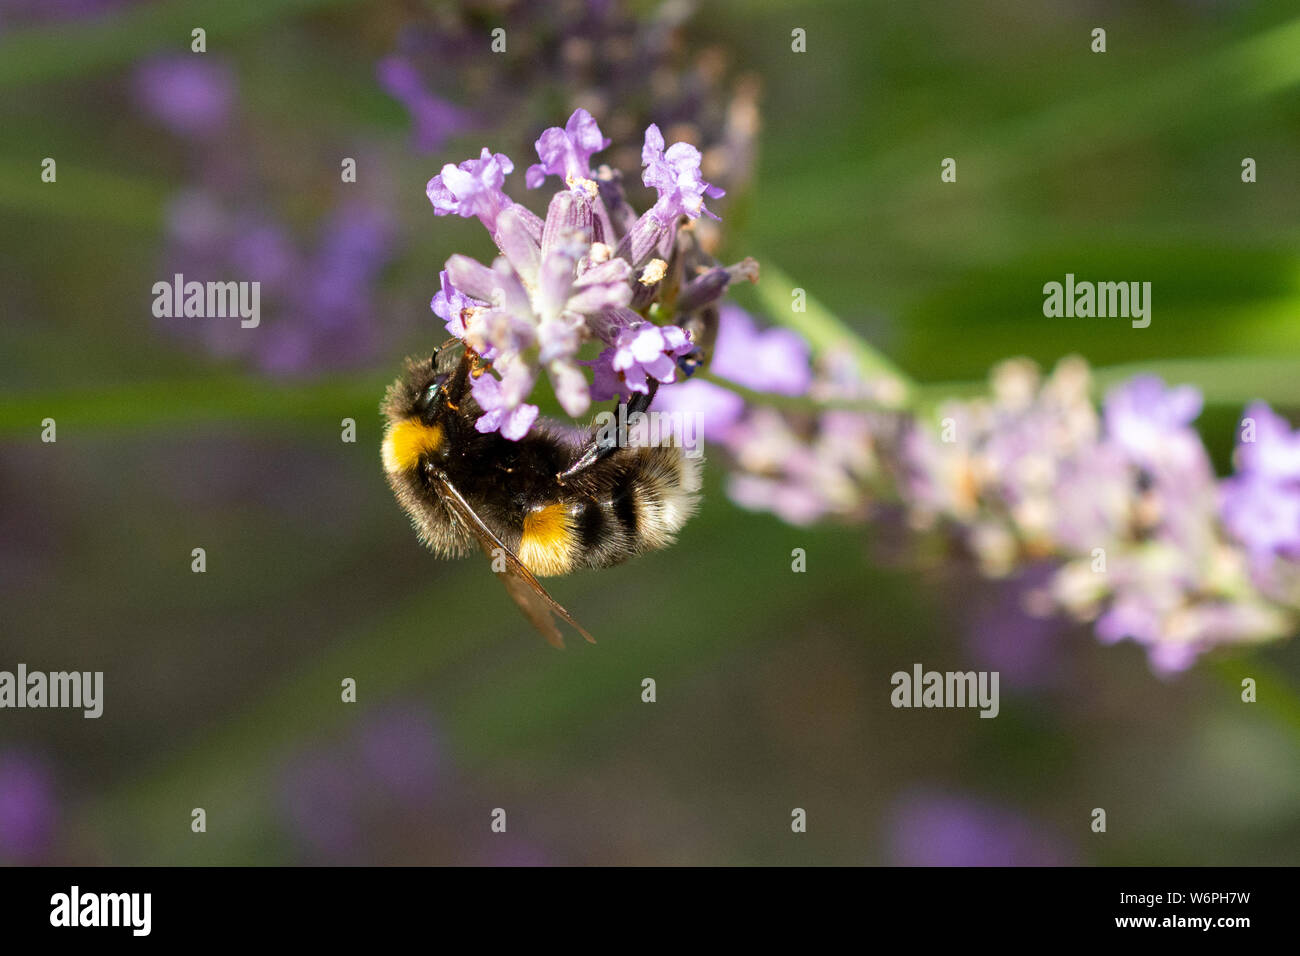 Queen bumblebee (Bombus terrestris) on a purple lavender flower in the UK Stock Photo